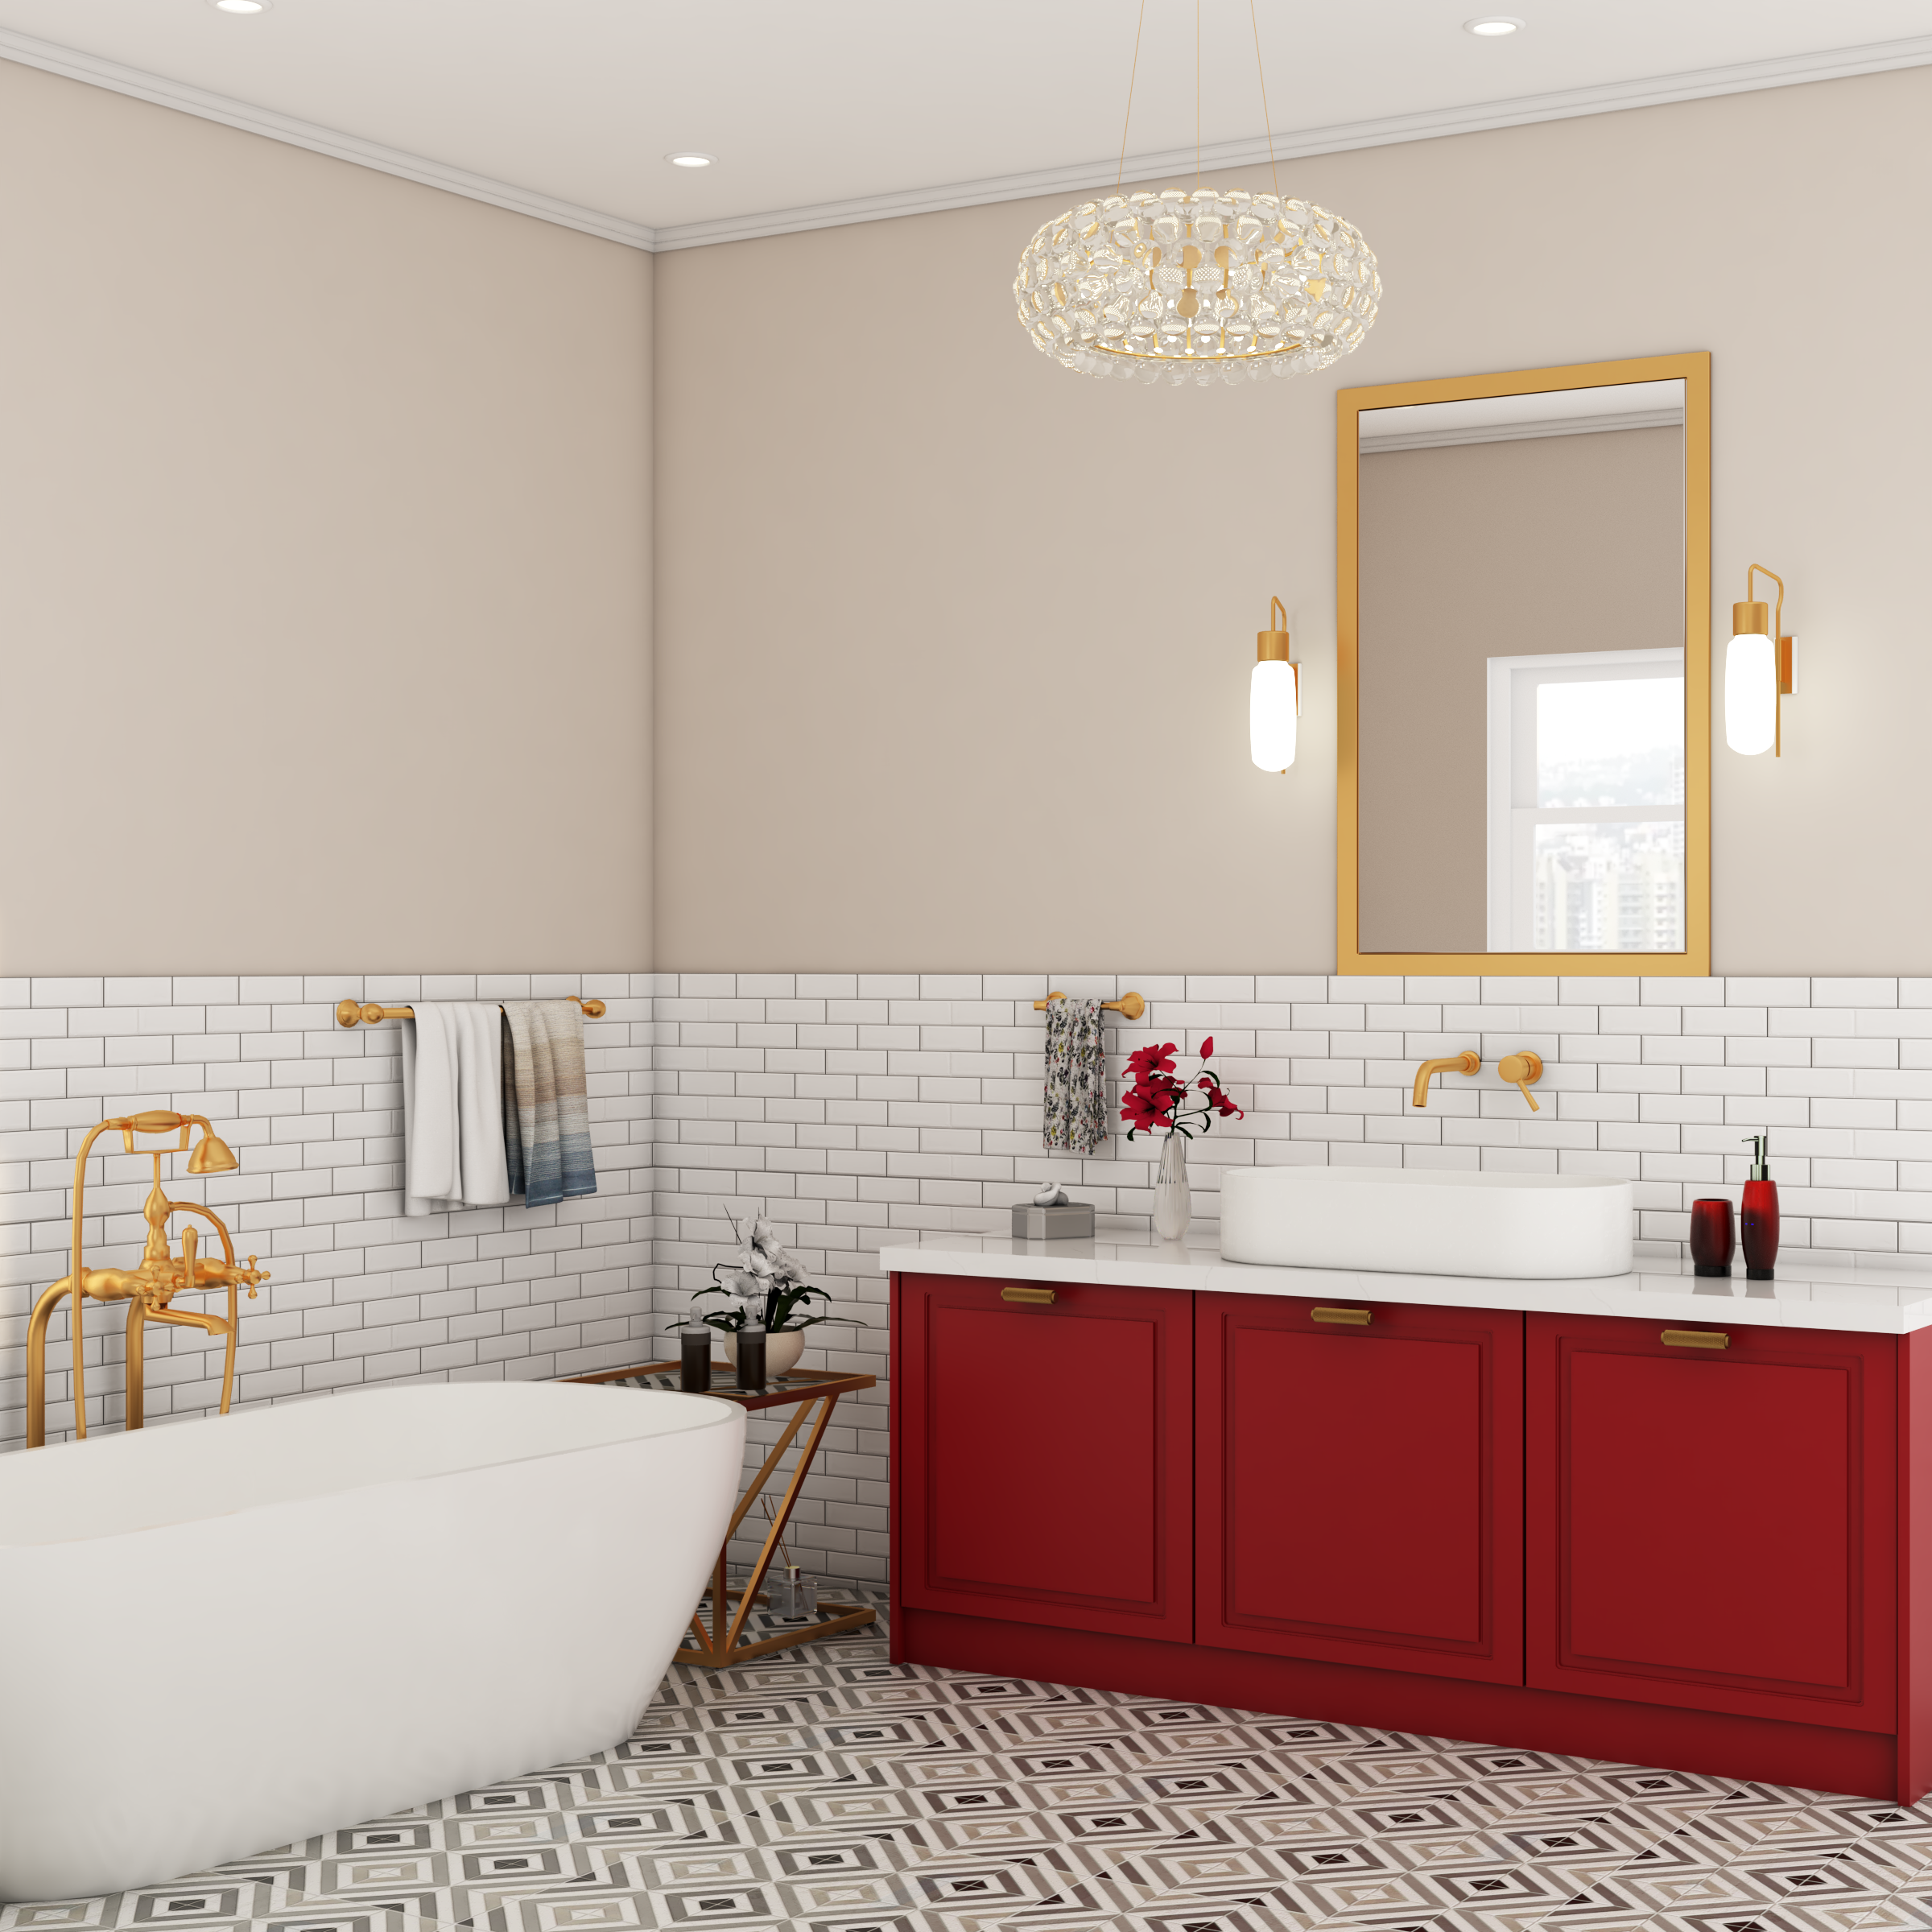 Classic Spacious Bathroom Design Idea With Red Cabinet